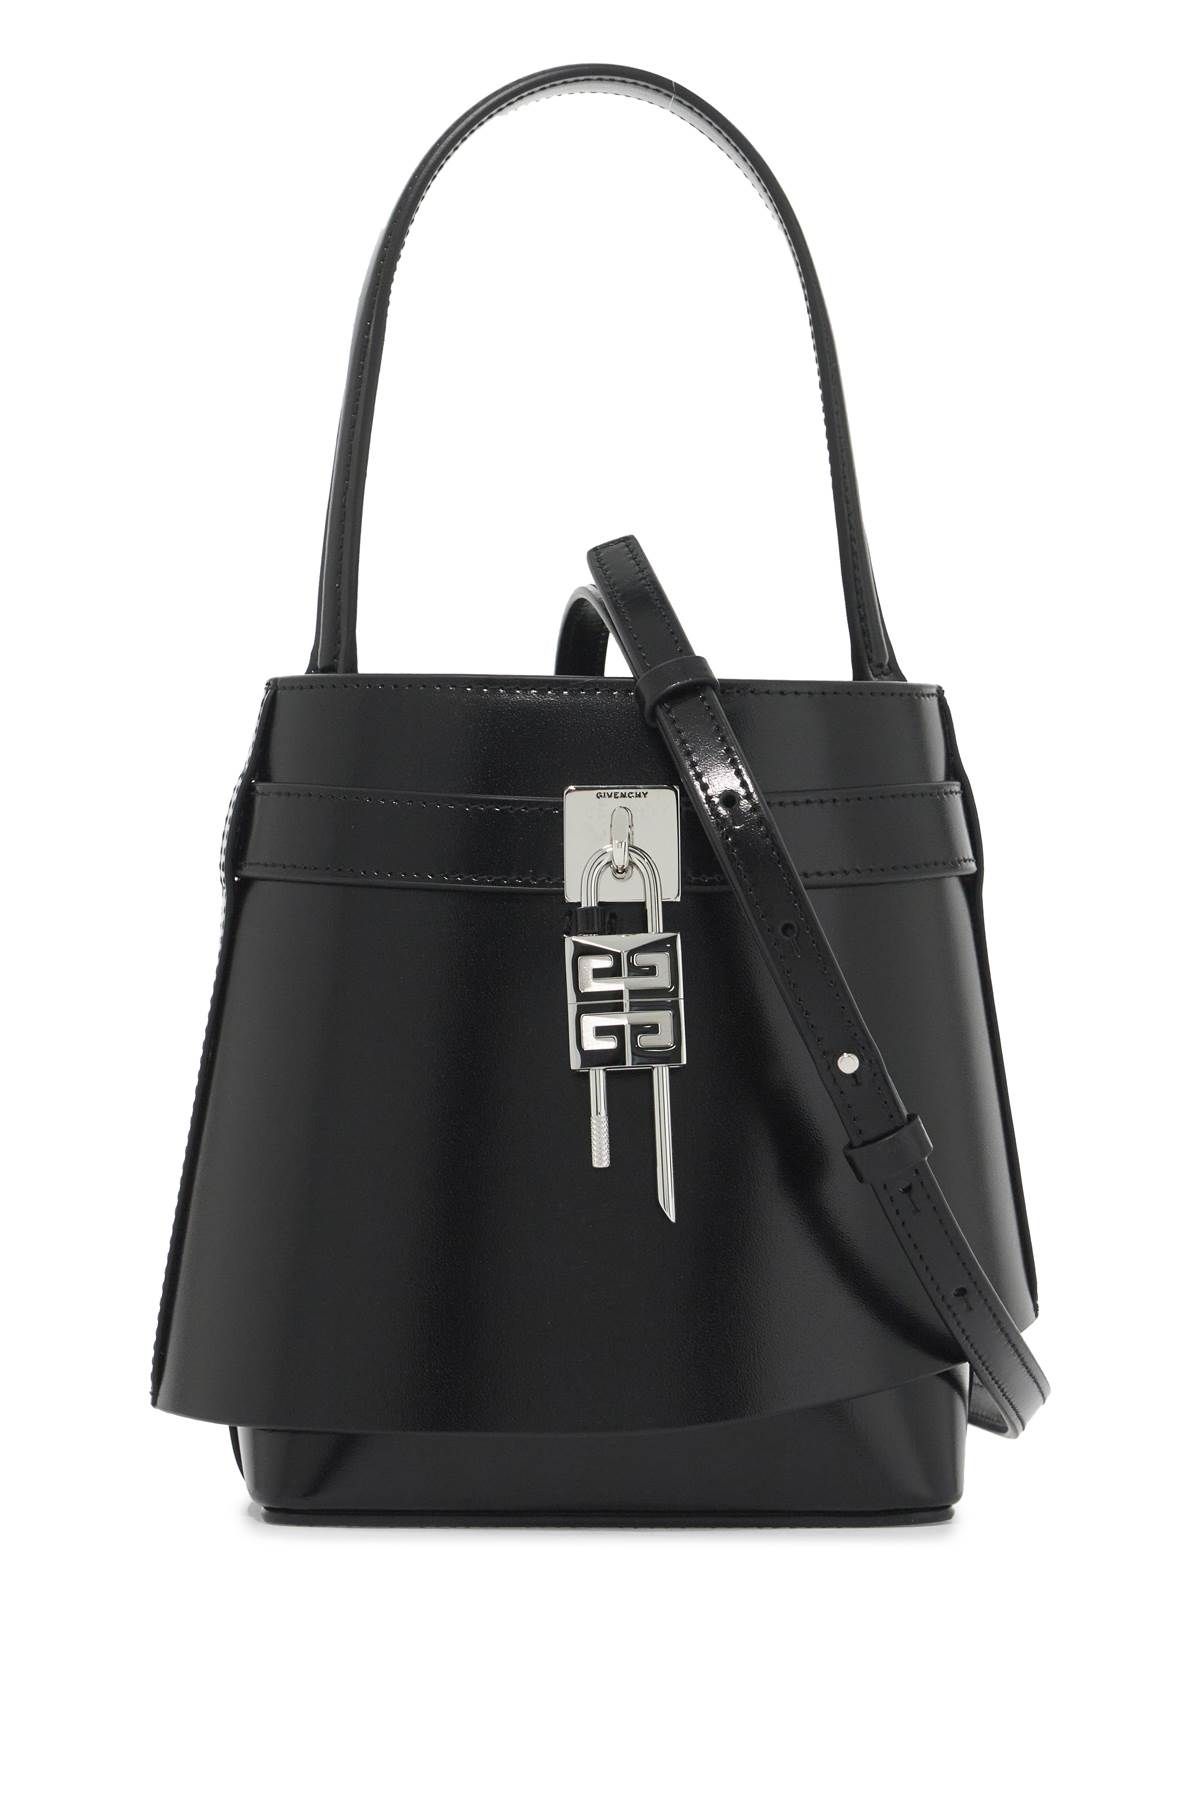 Givenchy GIVENCHY -shaped shark lock leather bucket bag